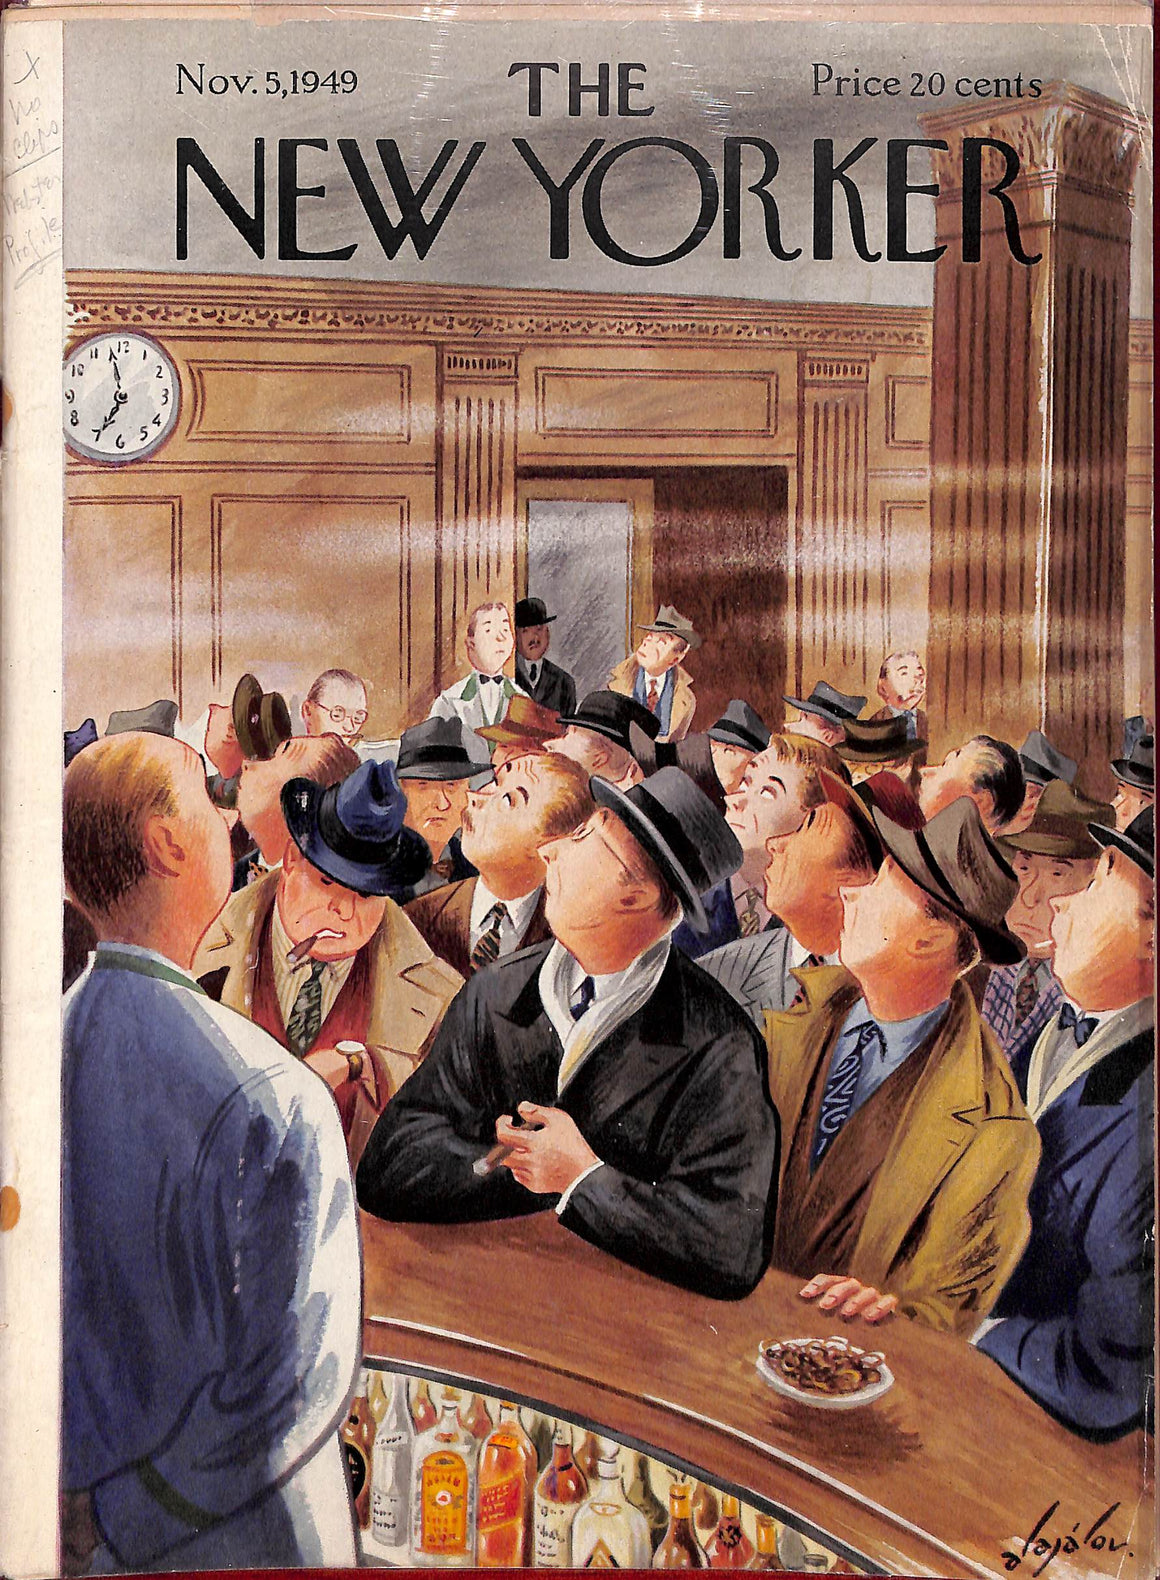 The New Yorker Nov. 5, 1949